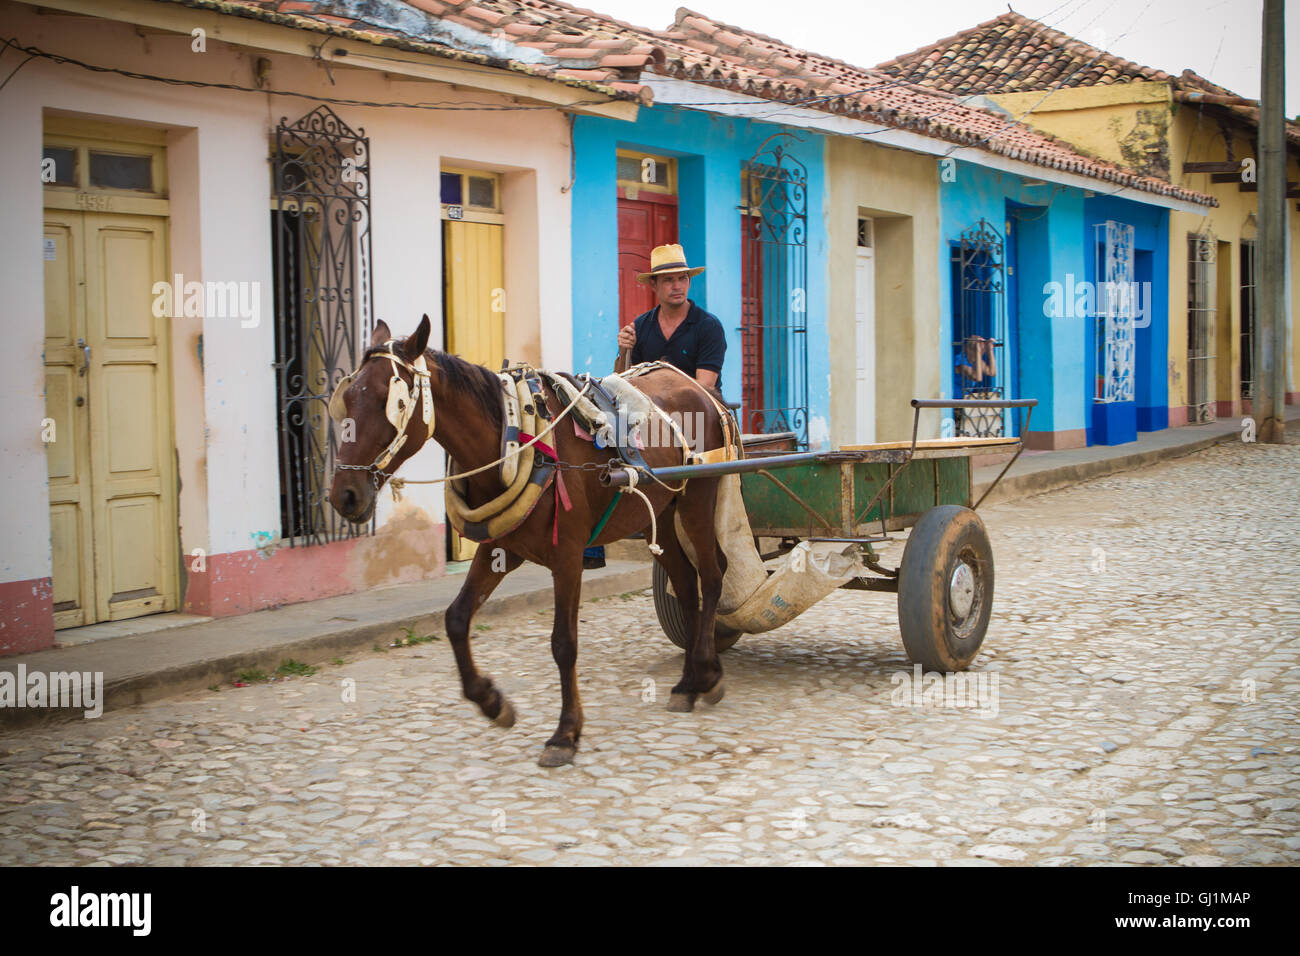 Man in horse-drawn cart, Trinidad, Cuba, 2013 Stock Photo